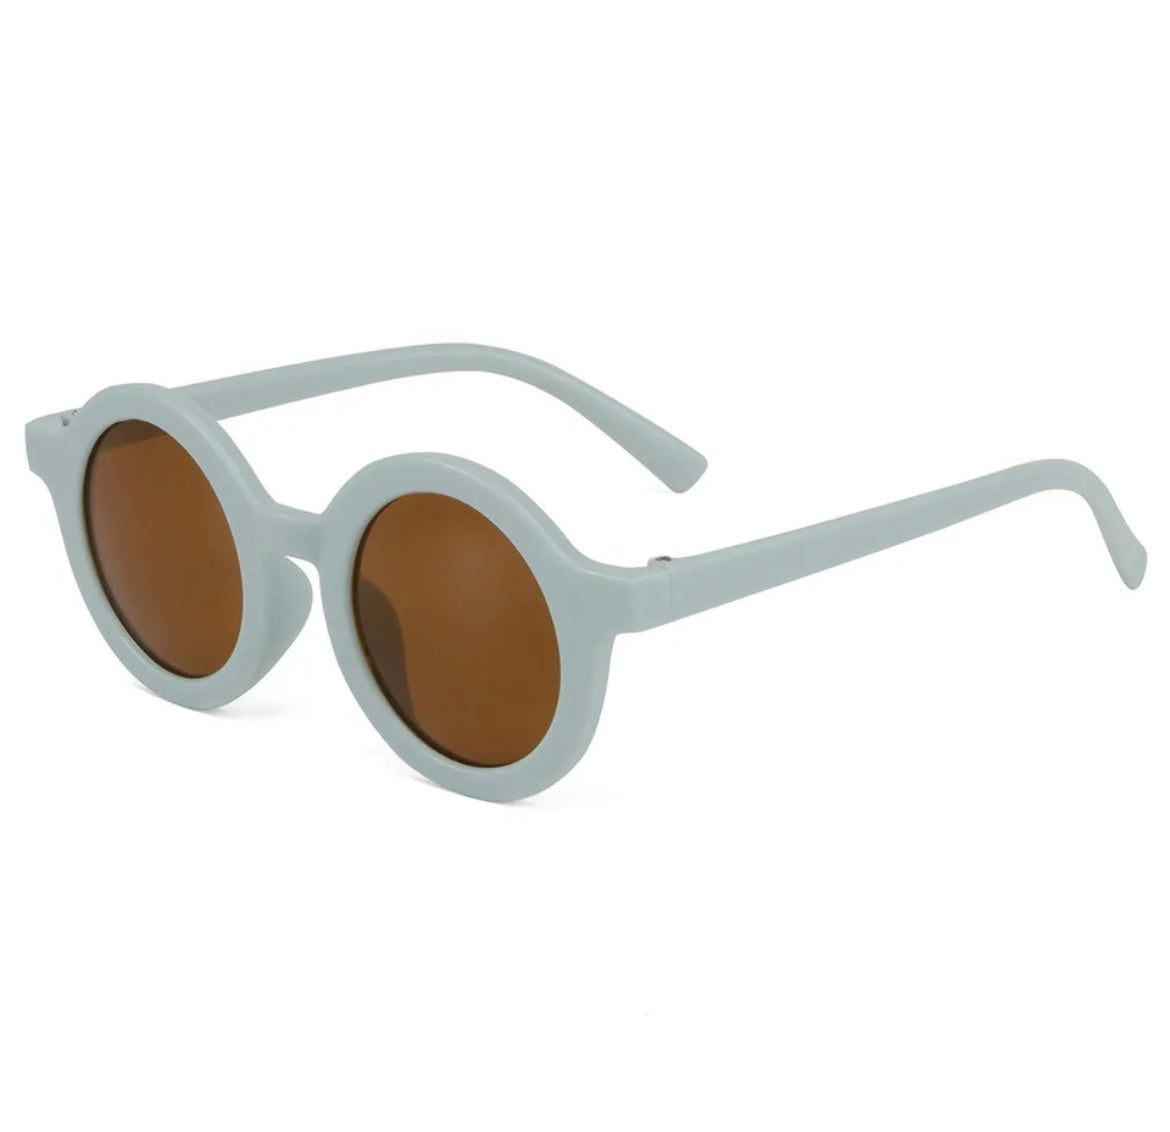 Baby/Toddler sunglasses